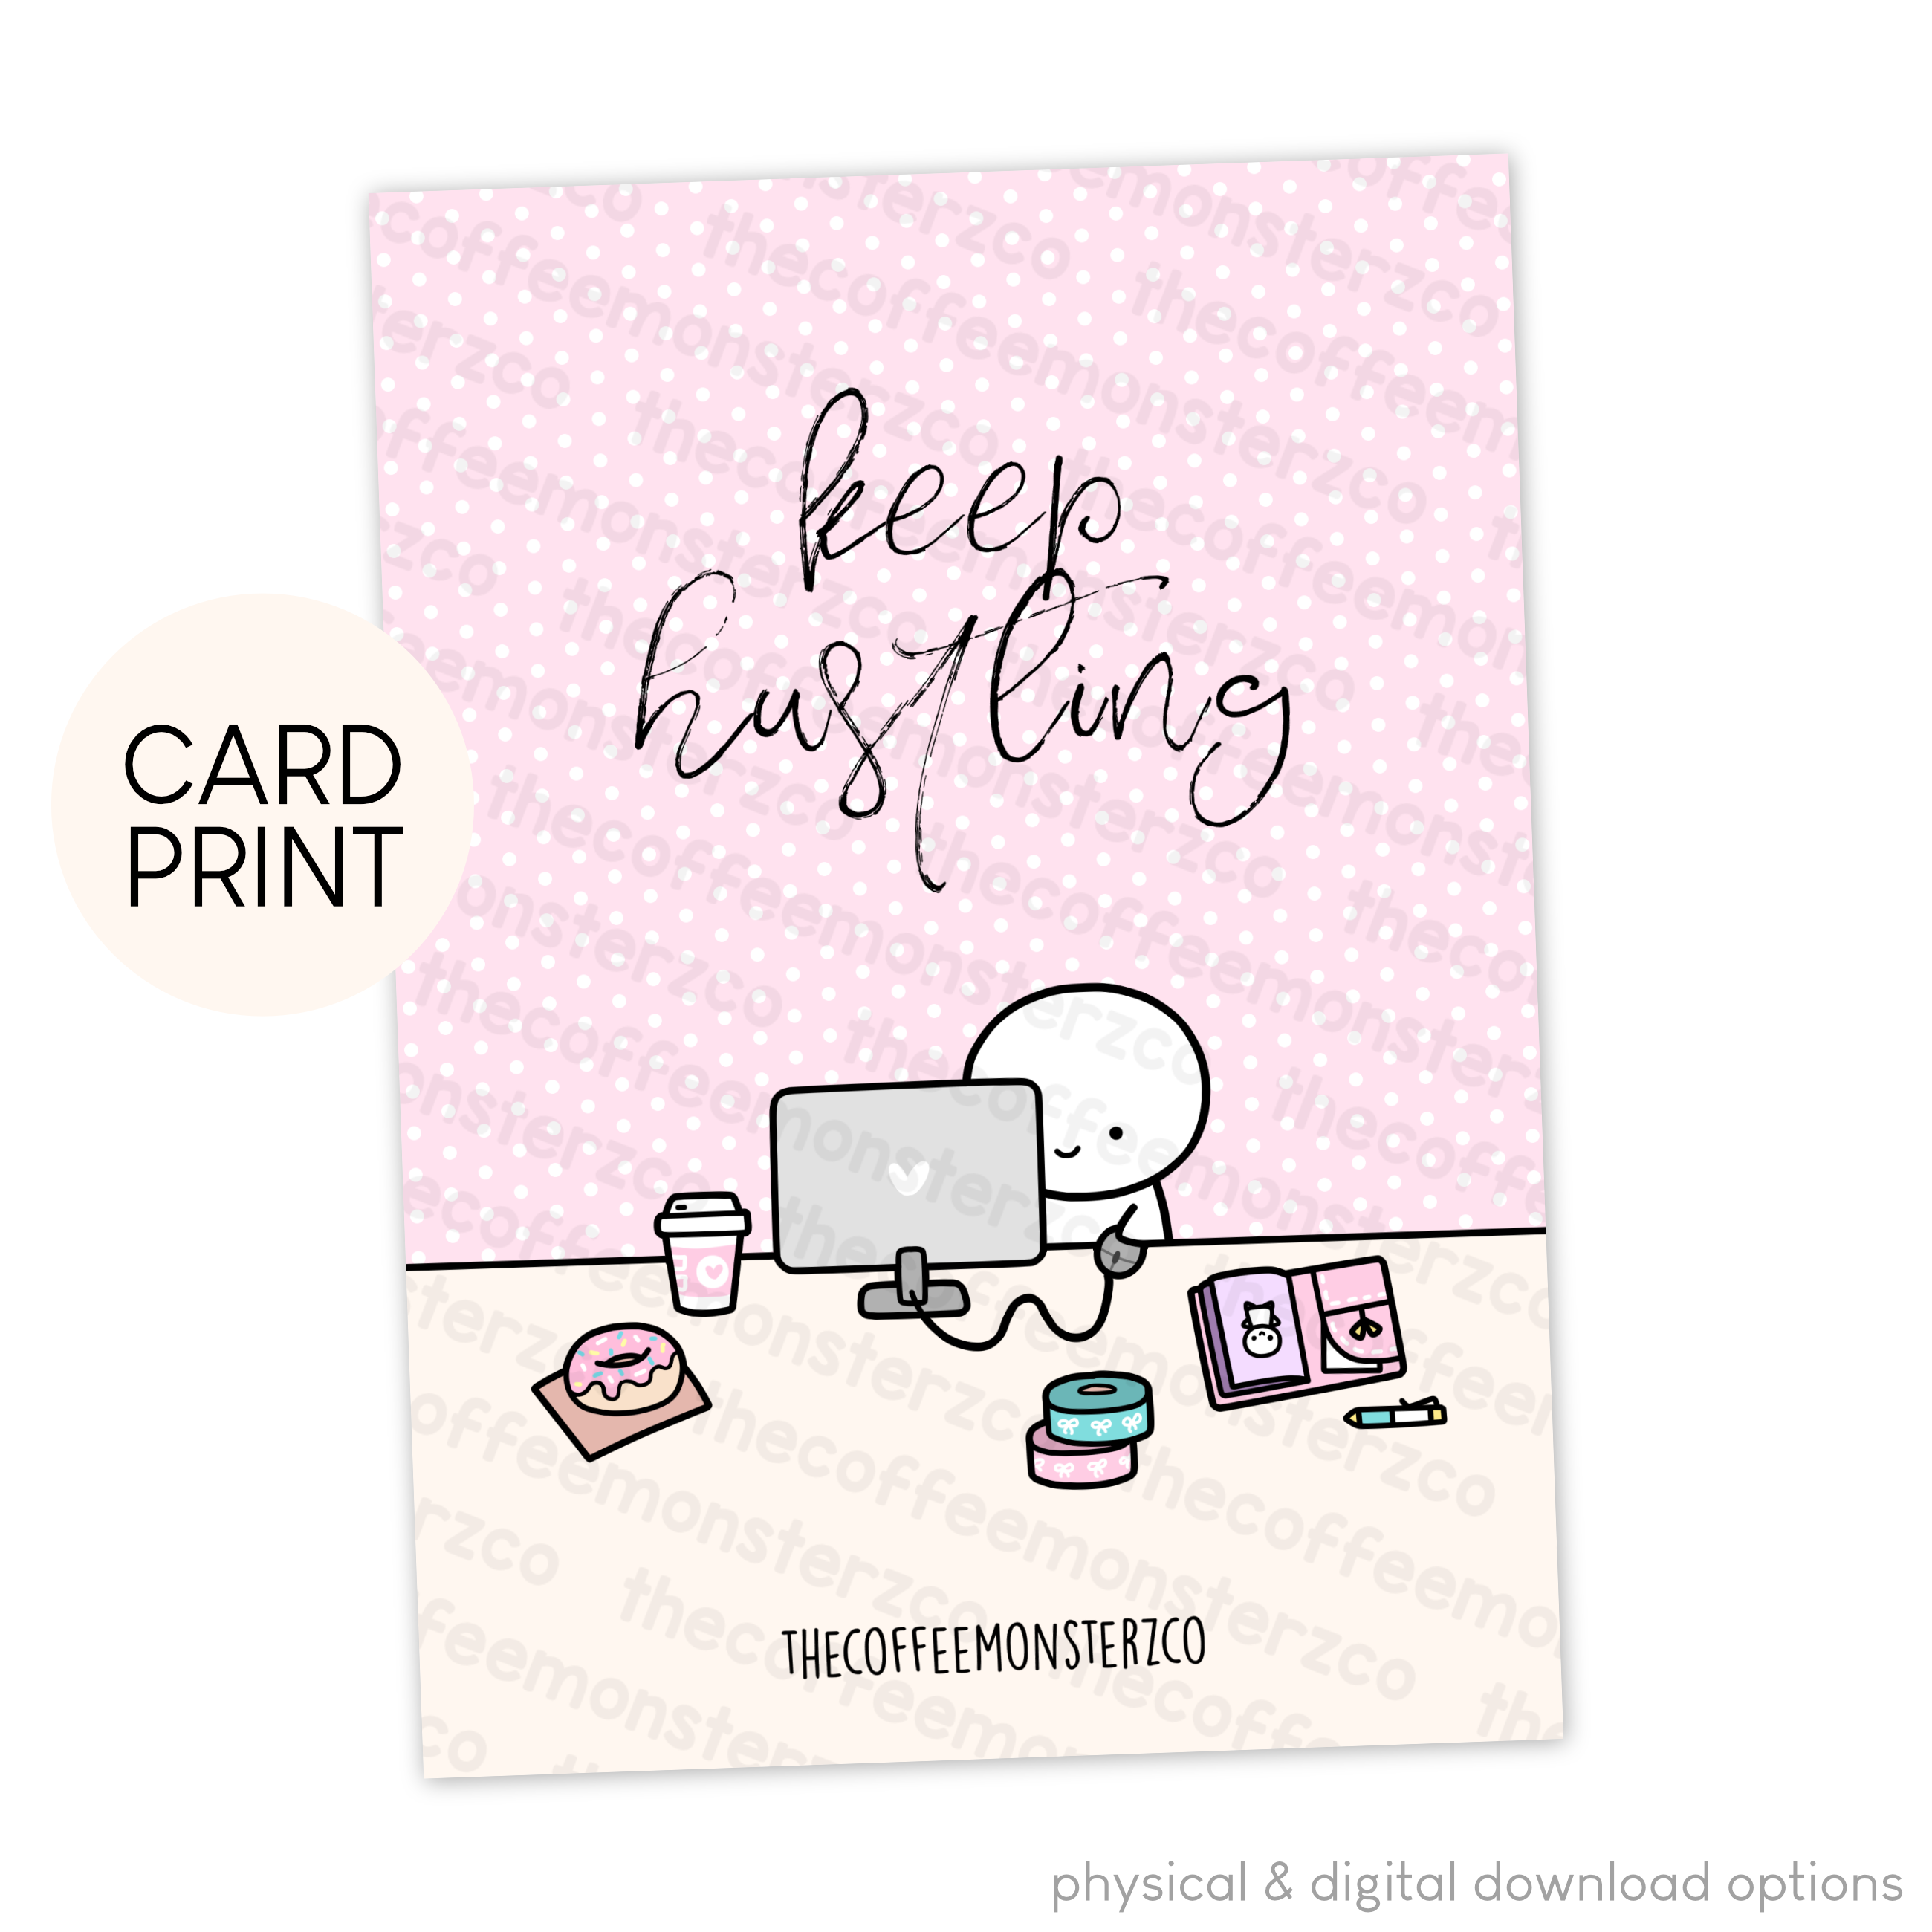 Keep Hustling - Card Print